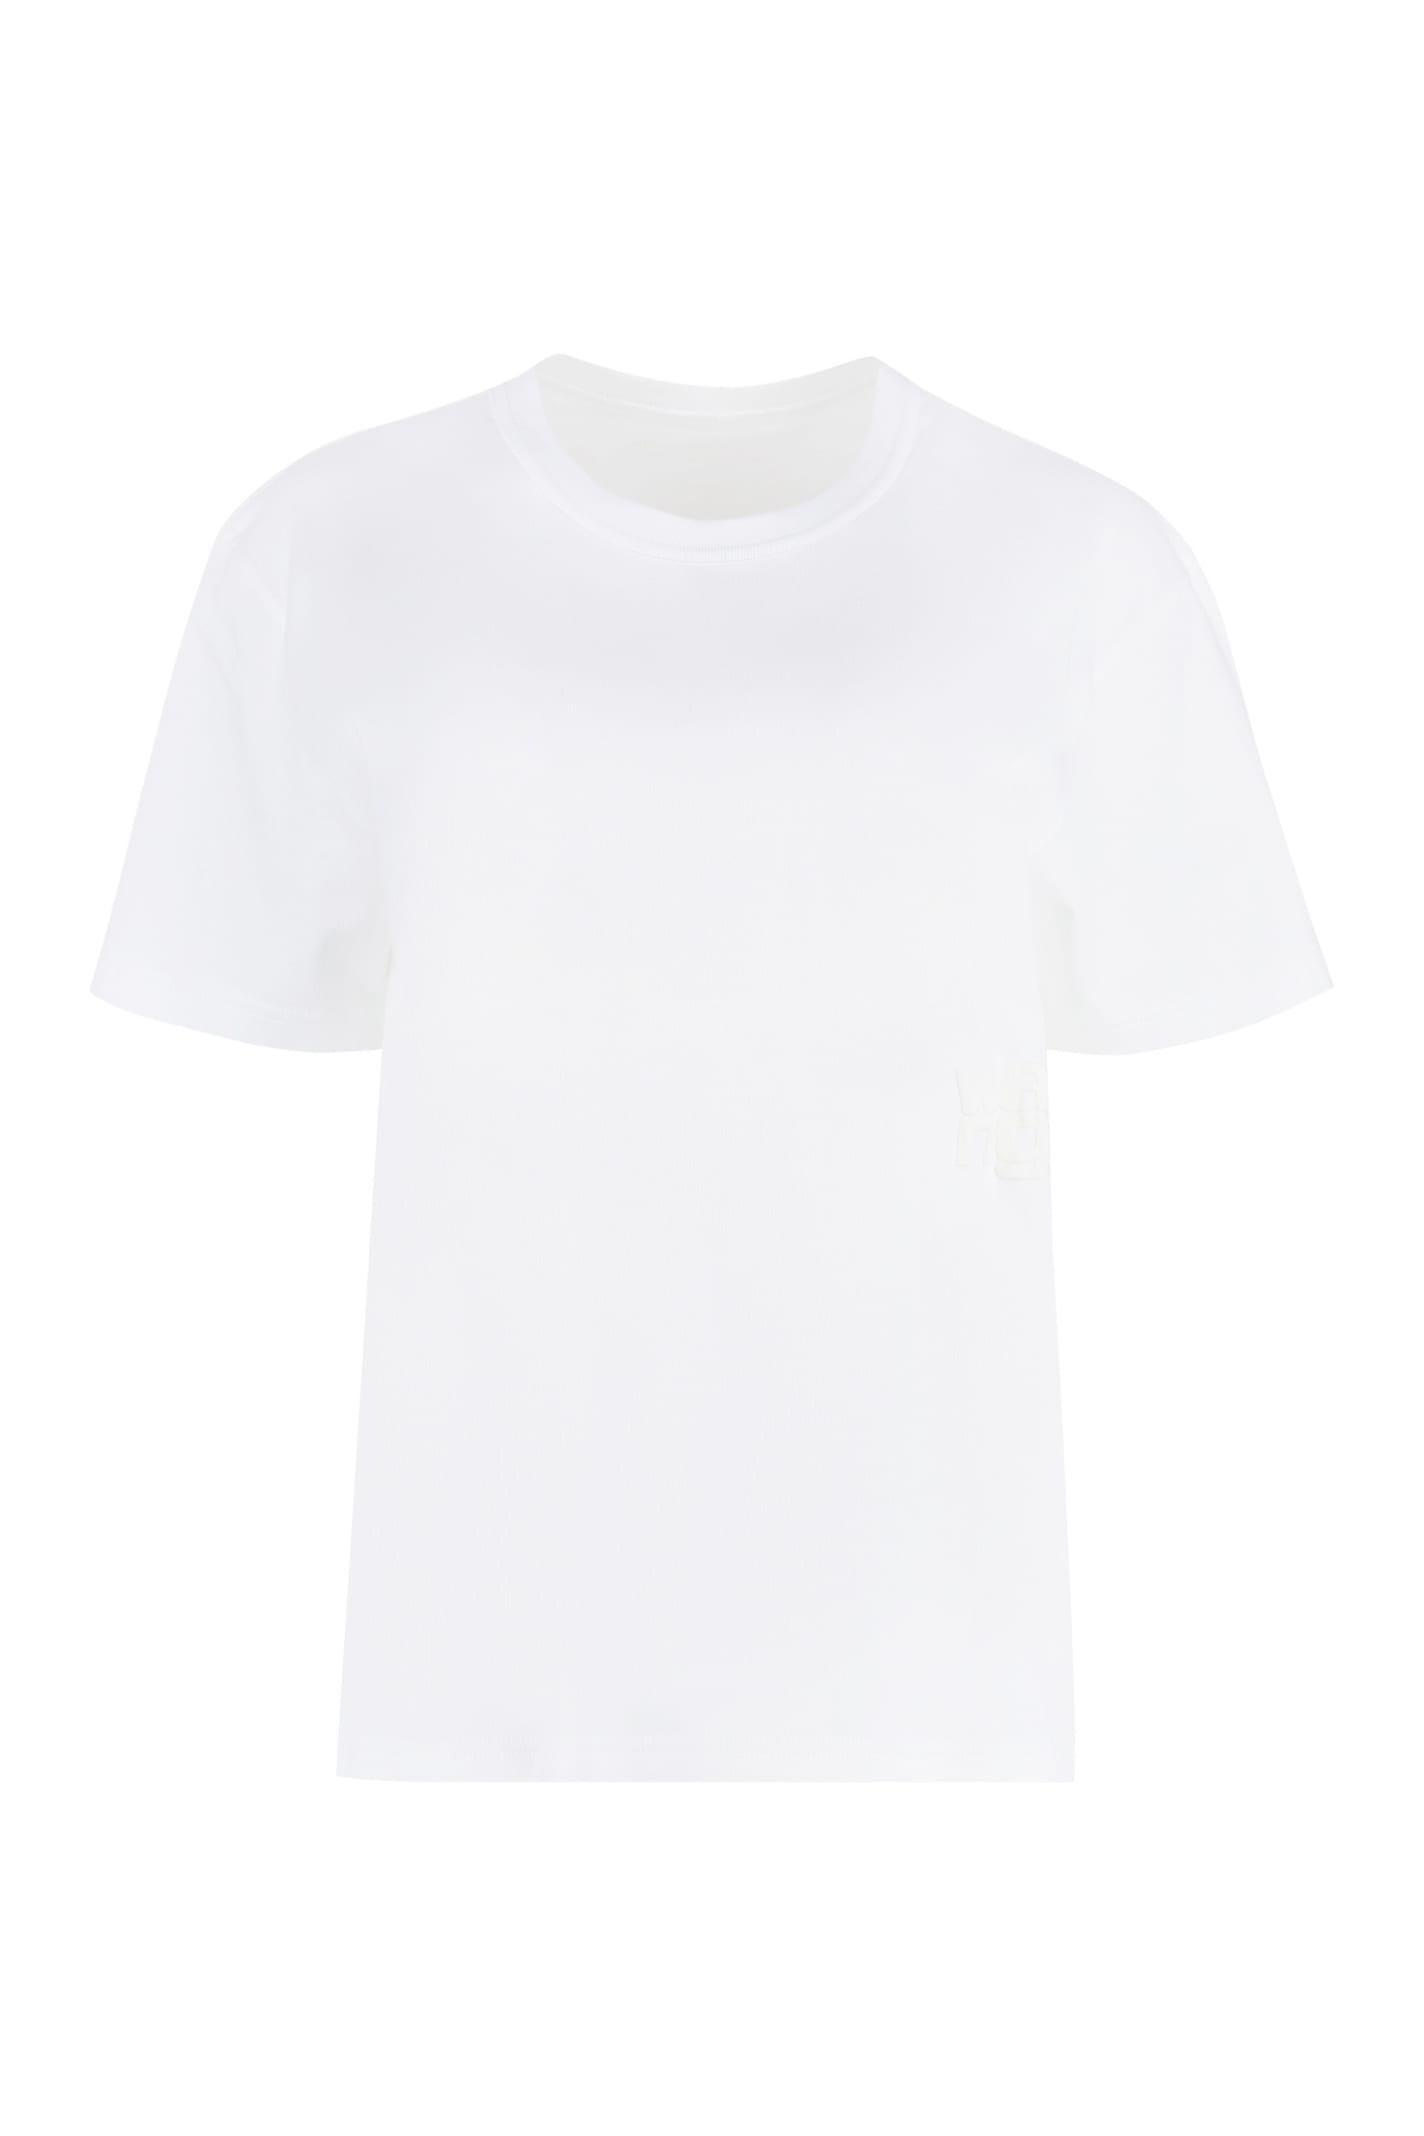 Alexander Wang Cotton Crew-neck T-shirt In White